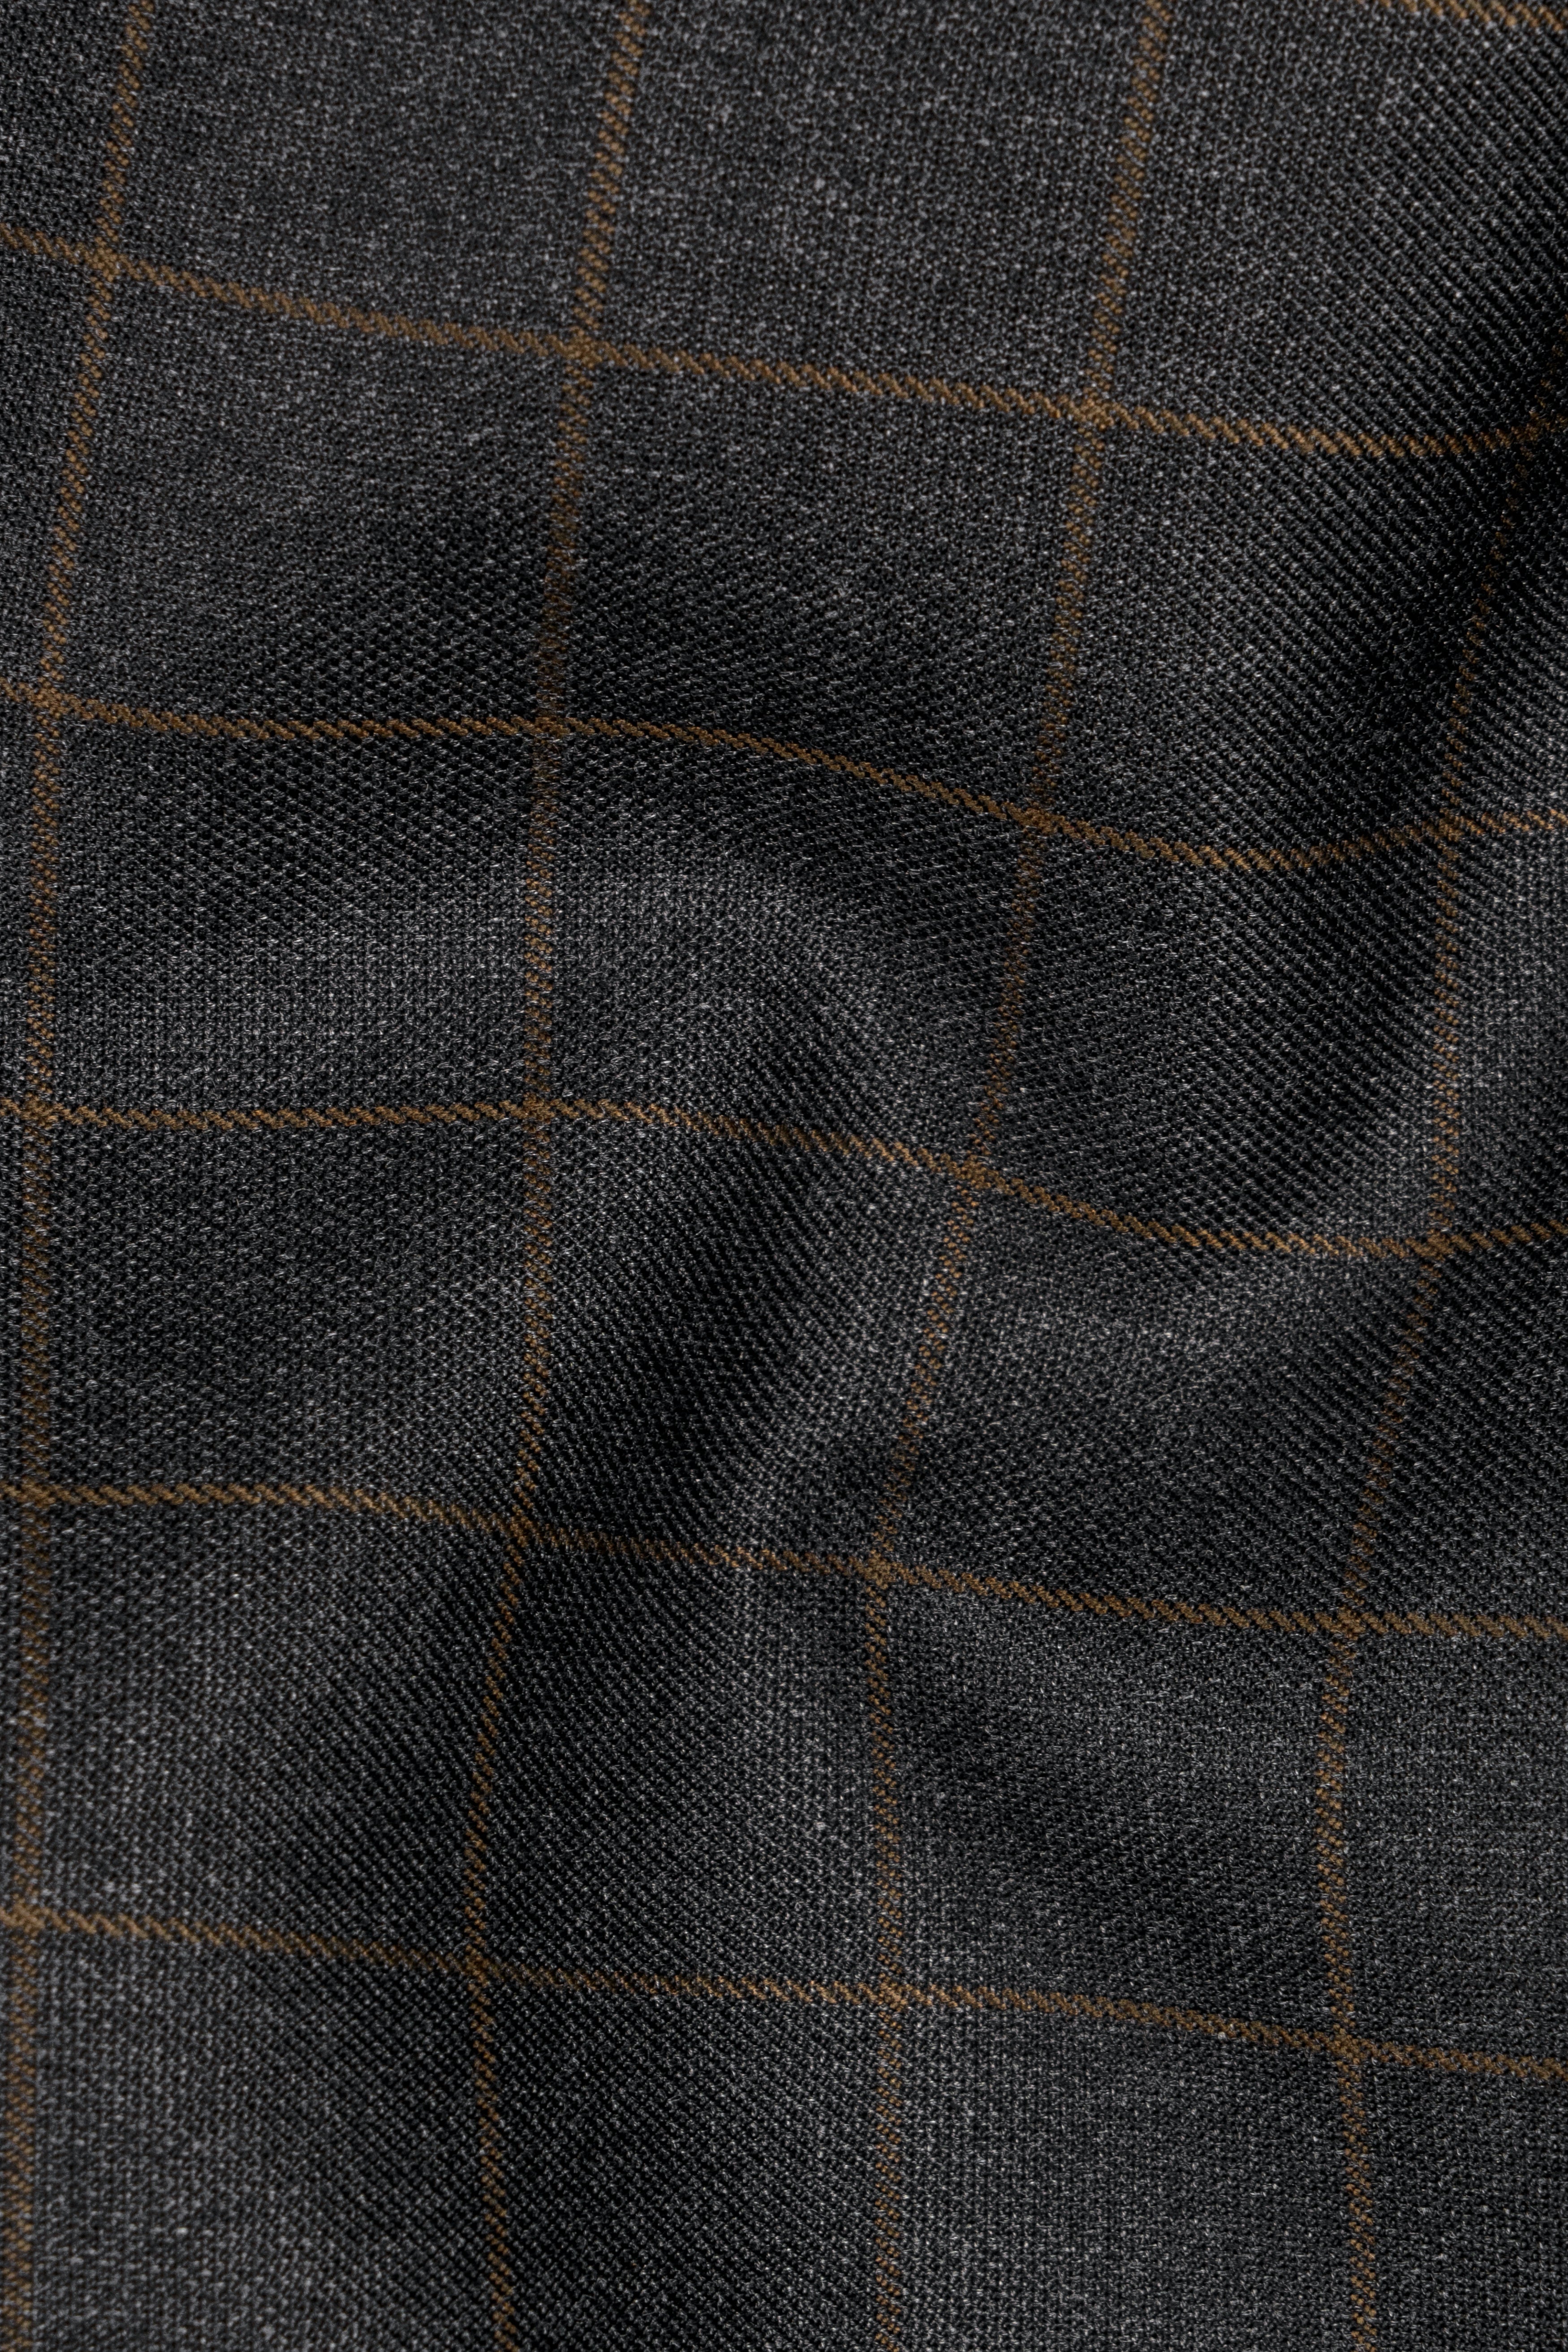 Gunmetal Gray with Dirt Brown Windowpane Wool Blend Blazer